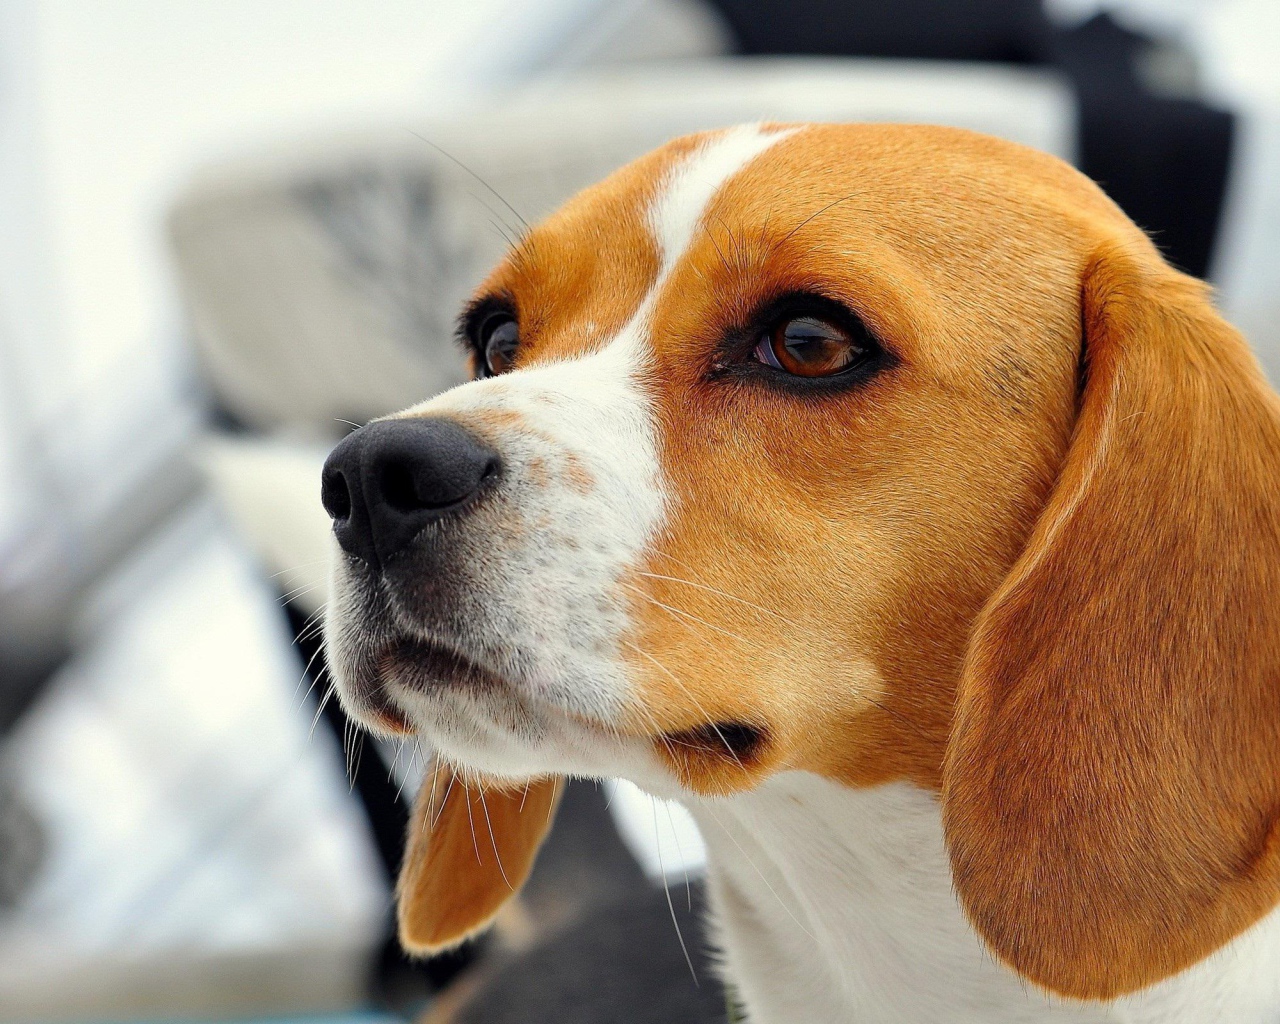 Beautiful dog beagle someone saw